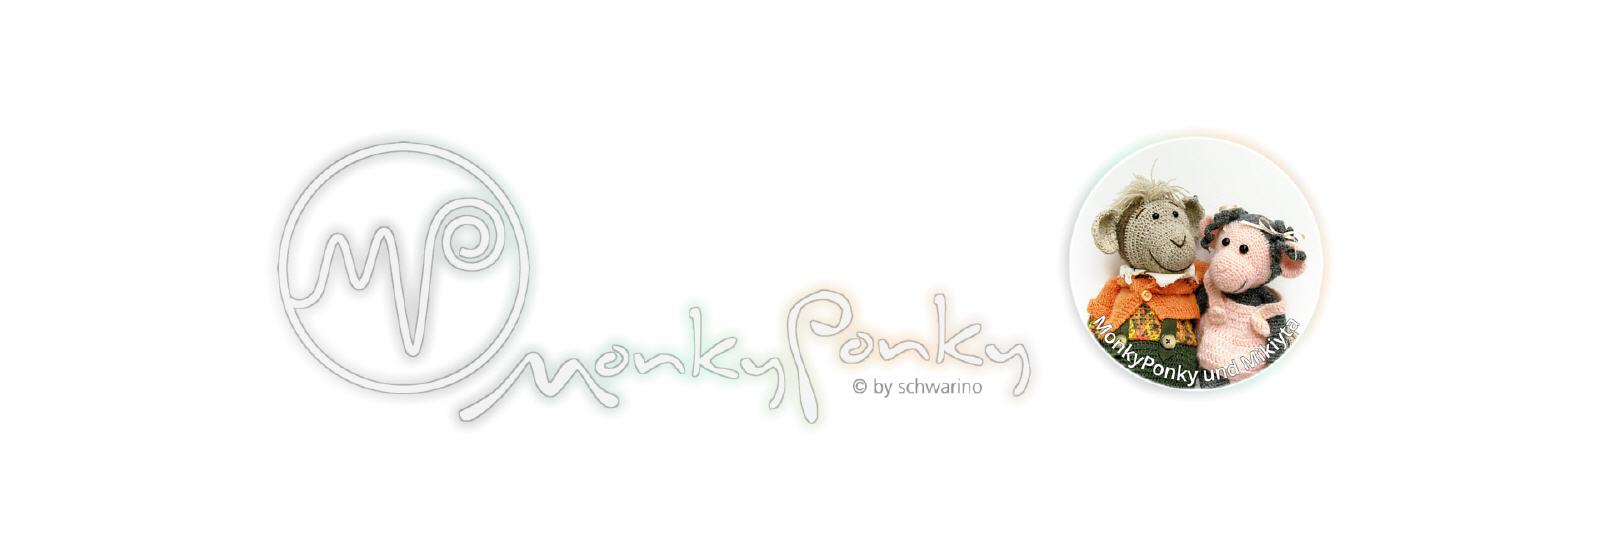 MonkyPonky's Unikate by schwarino